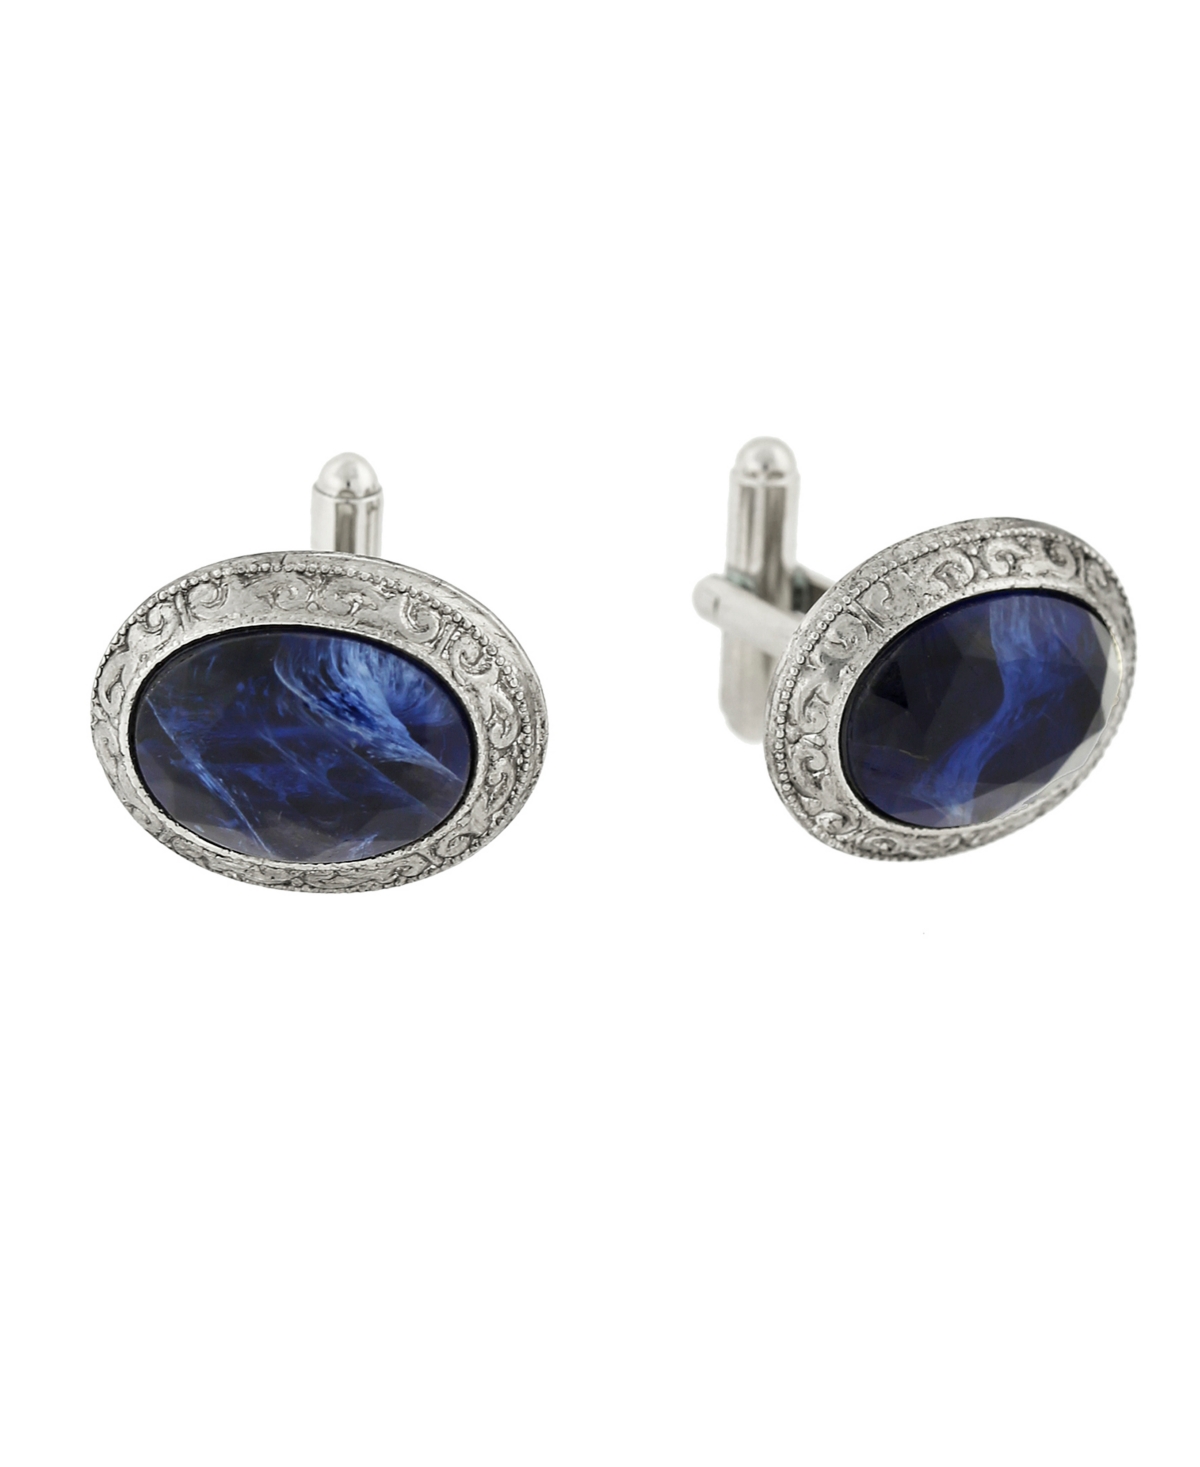 Jewelry Silver-Tone Oval Cufflinks - Blue